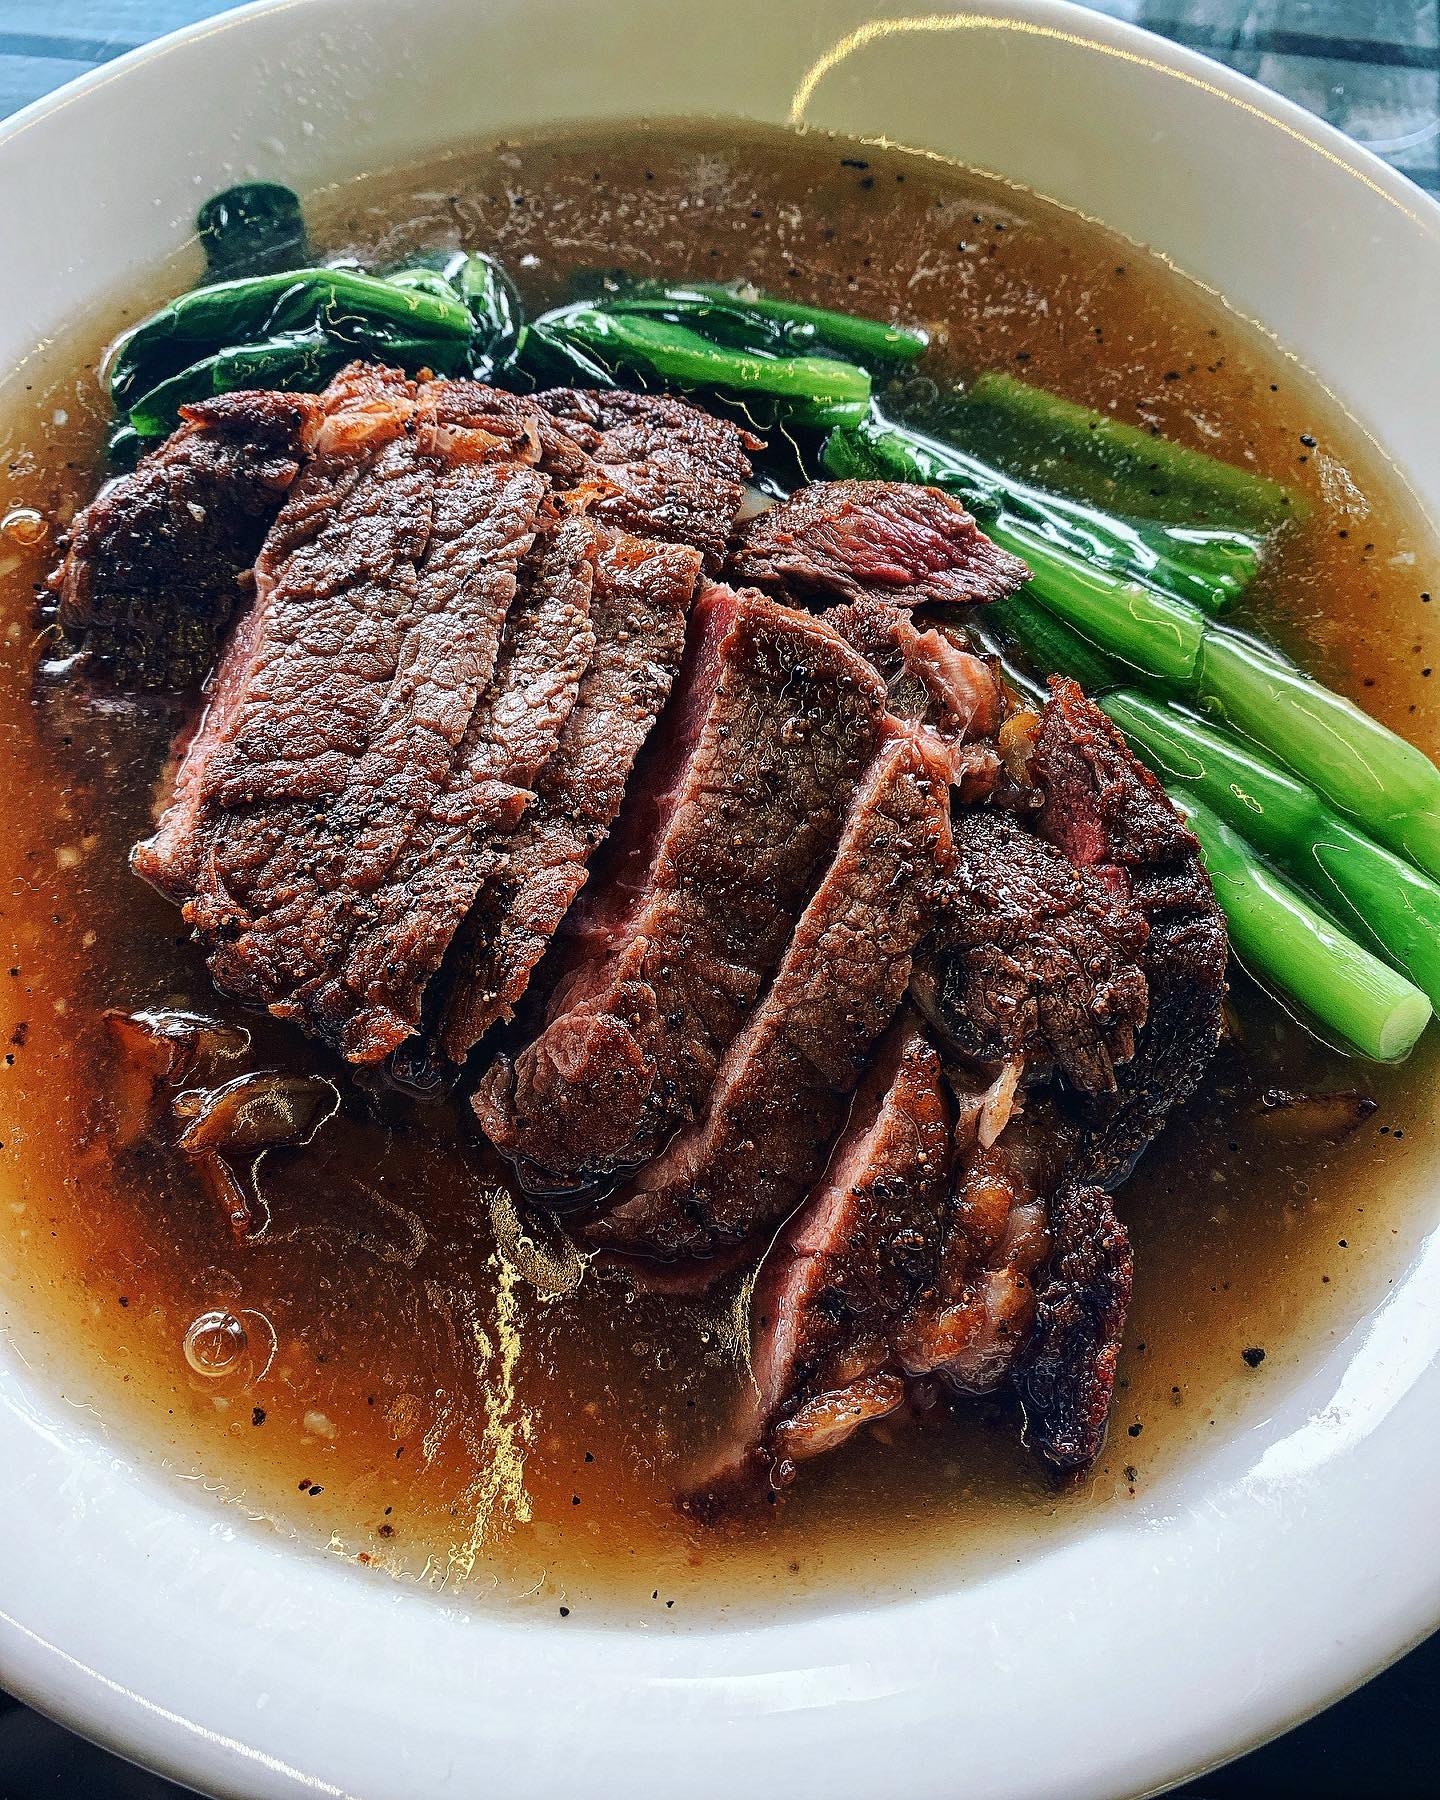 hidden romantic restaurants singapore - Bistro Gardenasia grilled ribeye beef hor fun